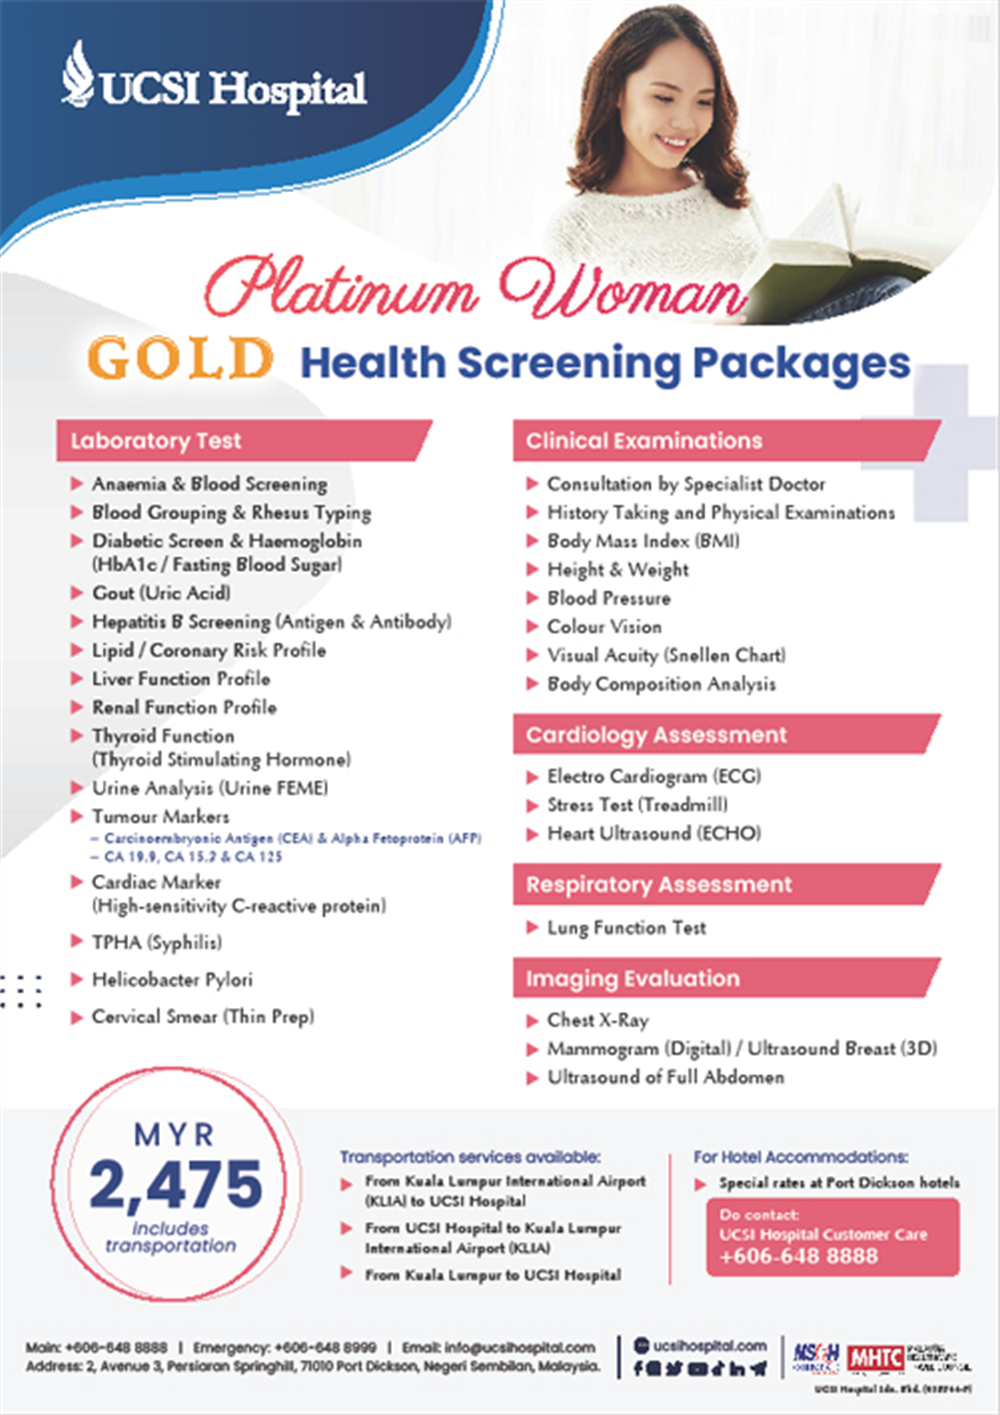 Gold Health Screening Package (Platinum Woman)